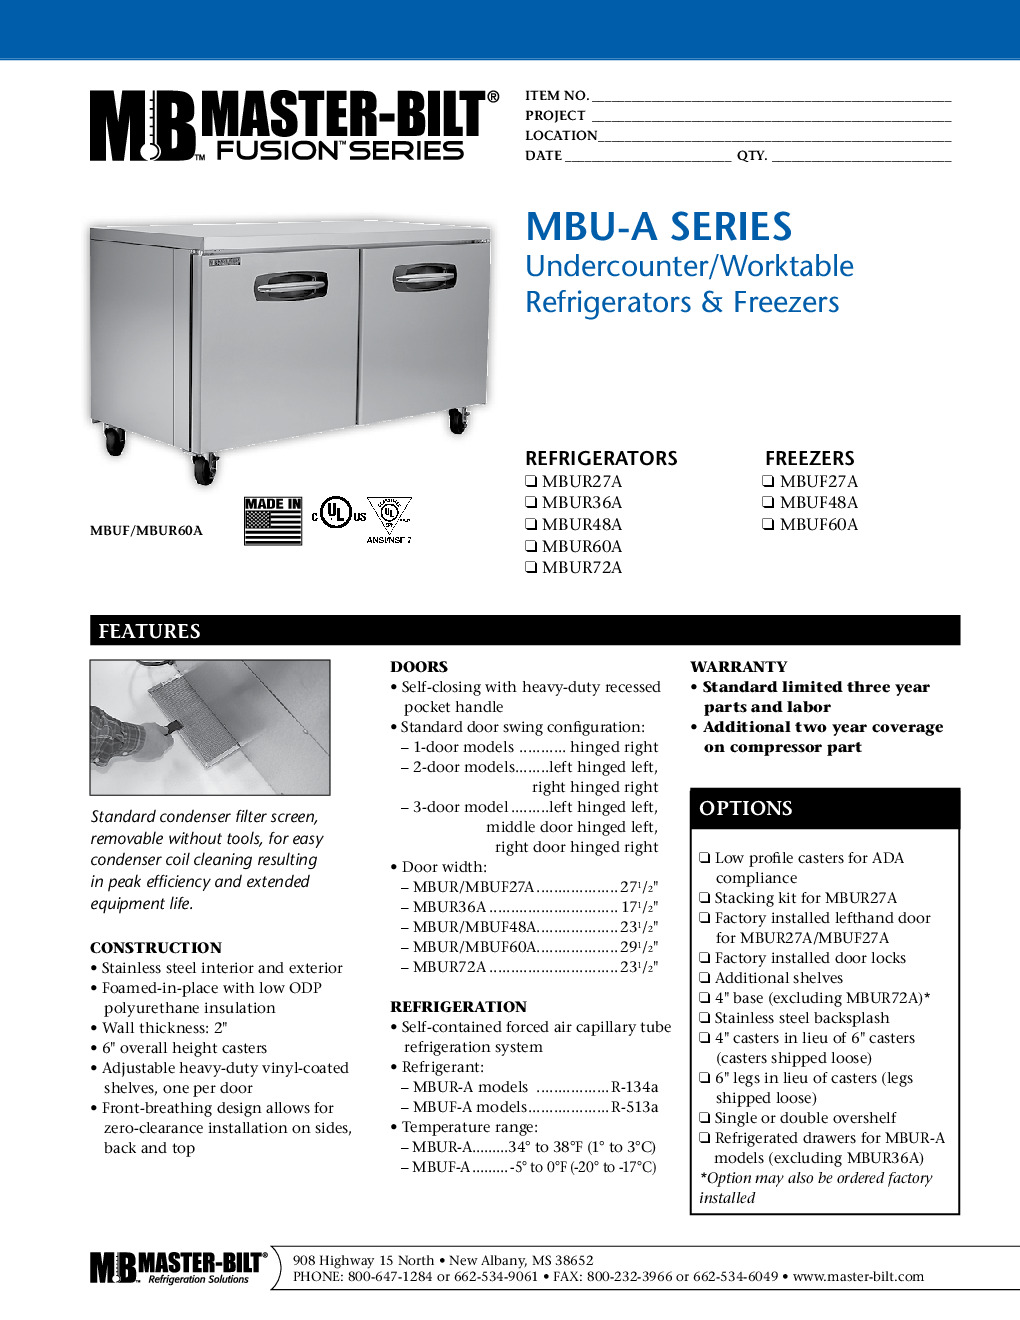 Master-Bilt MBUR27A-001 Reach-In Undercounter Refrigerator